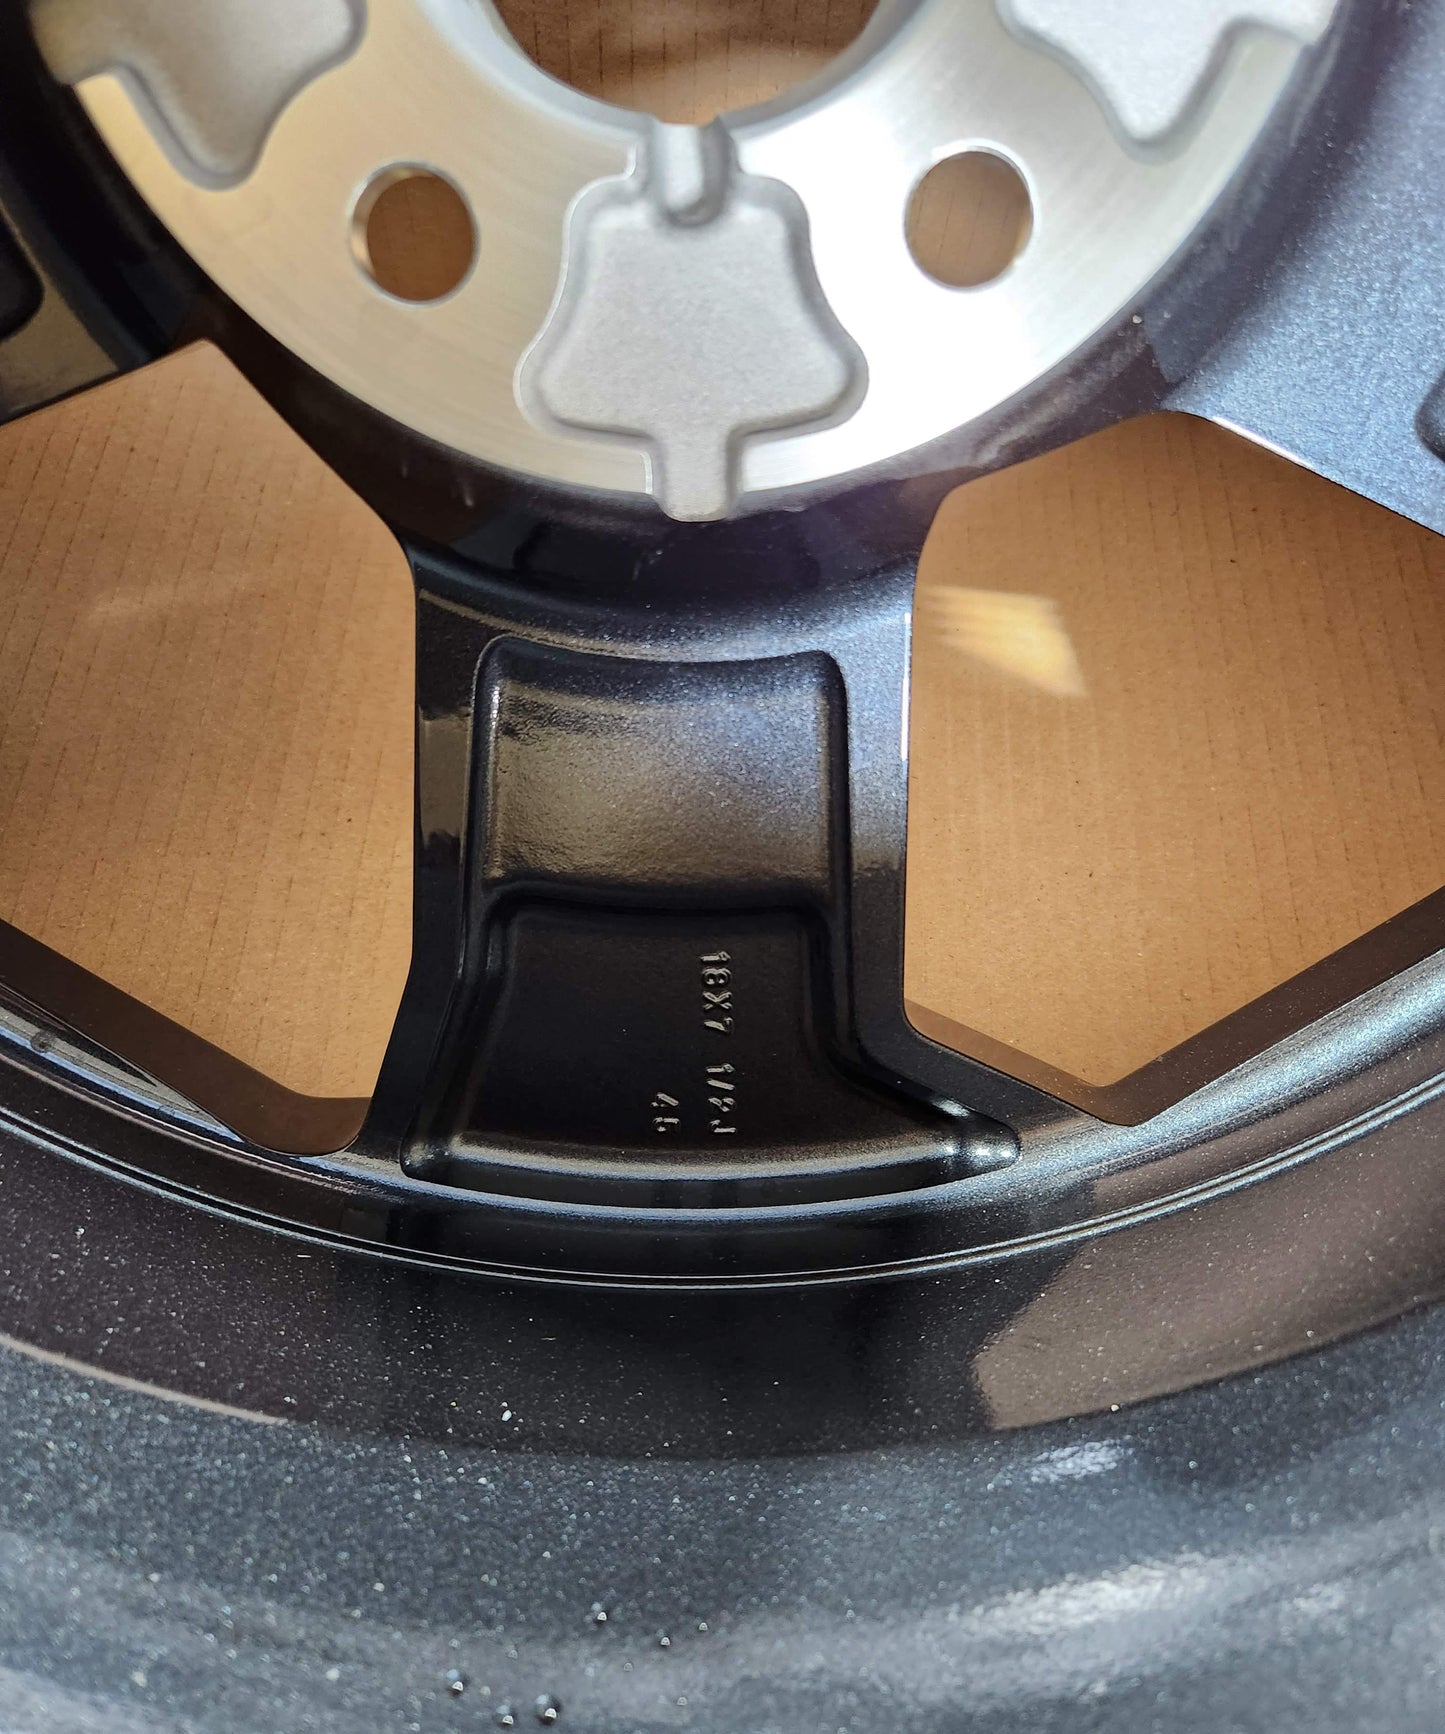 Nissan Qashqai 18" Alloy Wheels Diamond Cut and Grey set of 4 D03006UA3A